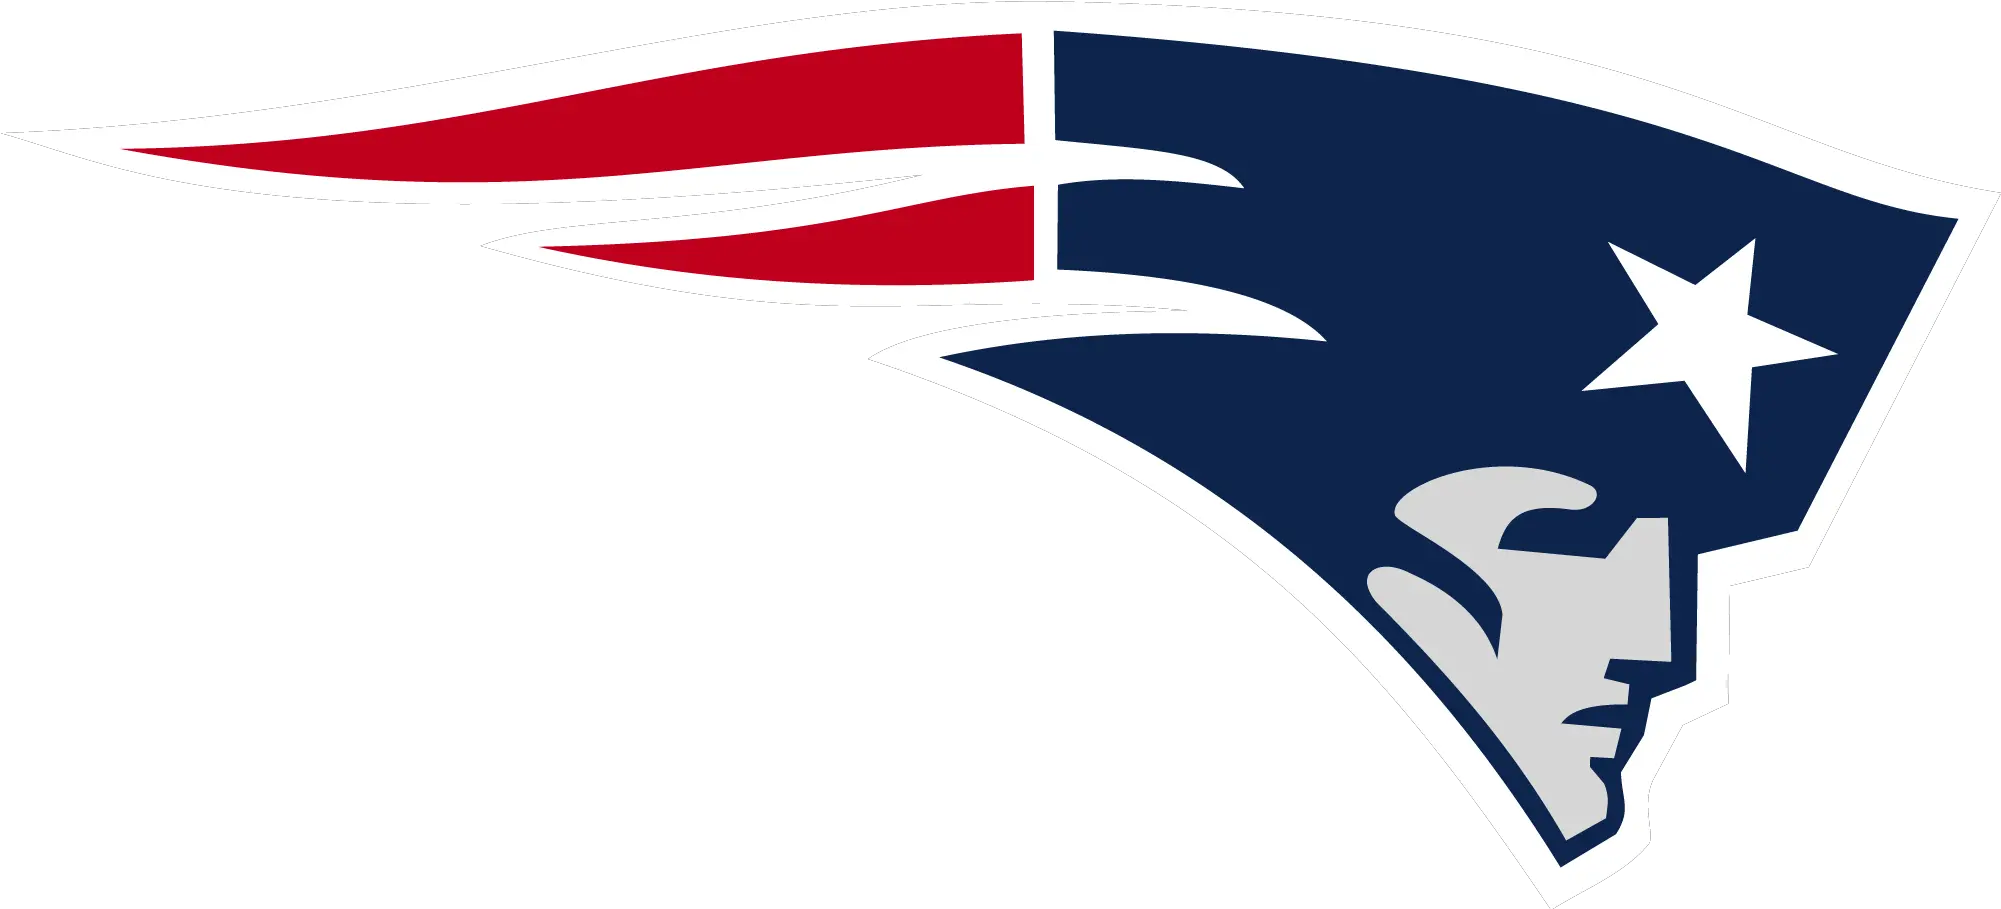 Download England Dallas Buffalo Nfl Bowl Patriots Cowboys New England Patriots Logo Png Cowboys Png